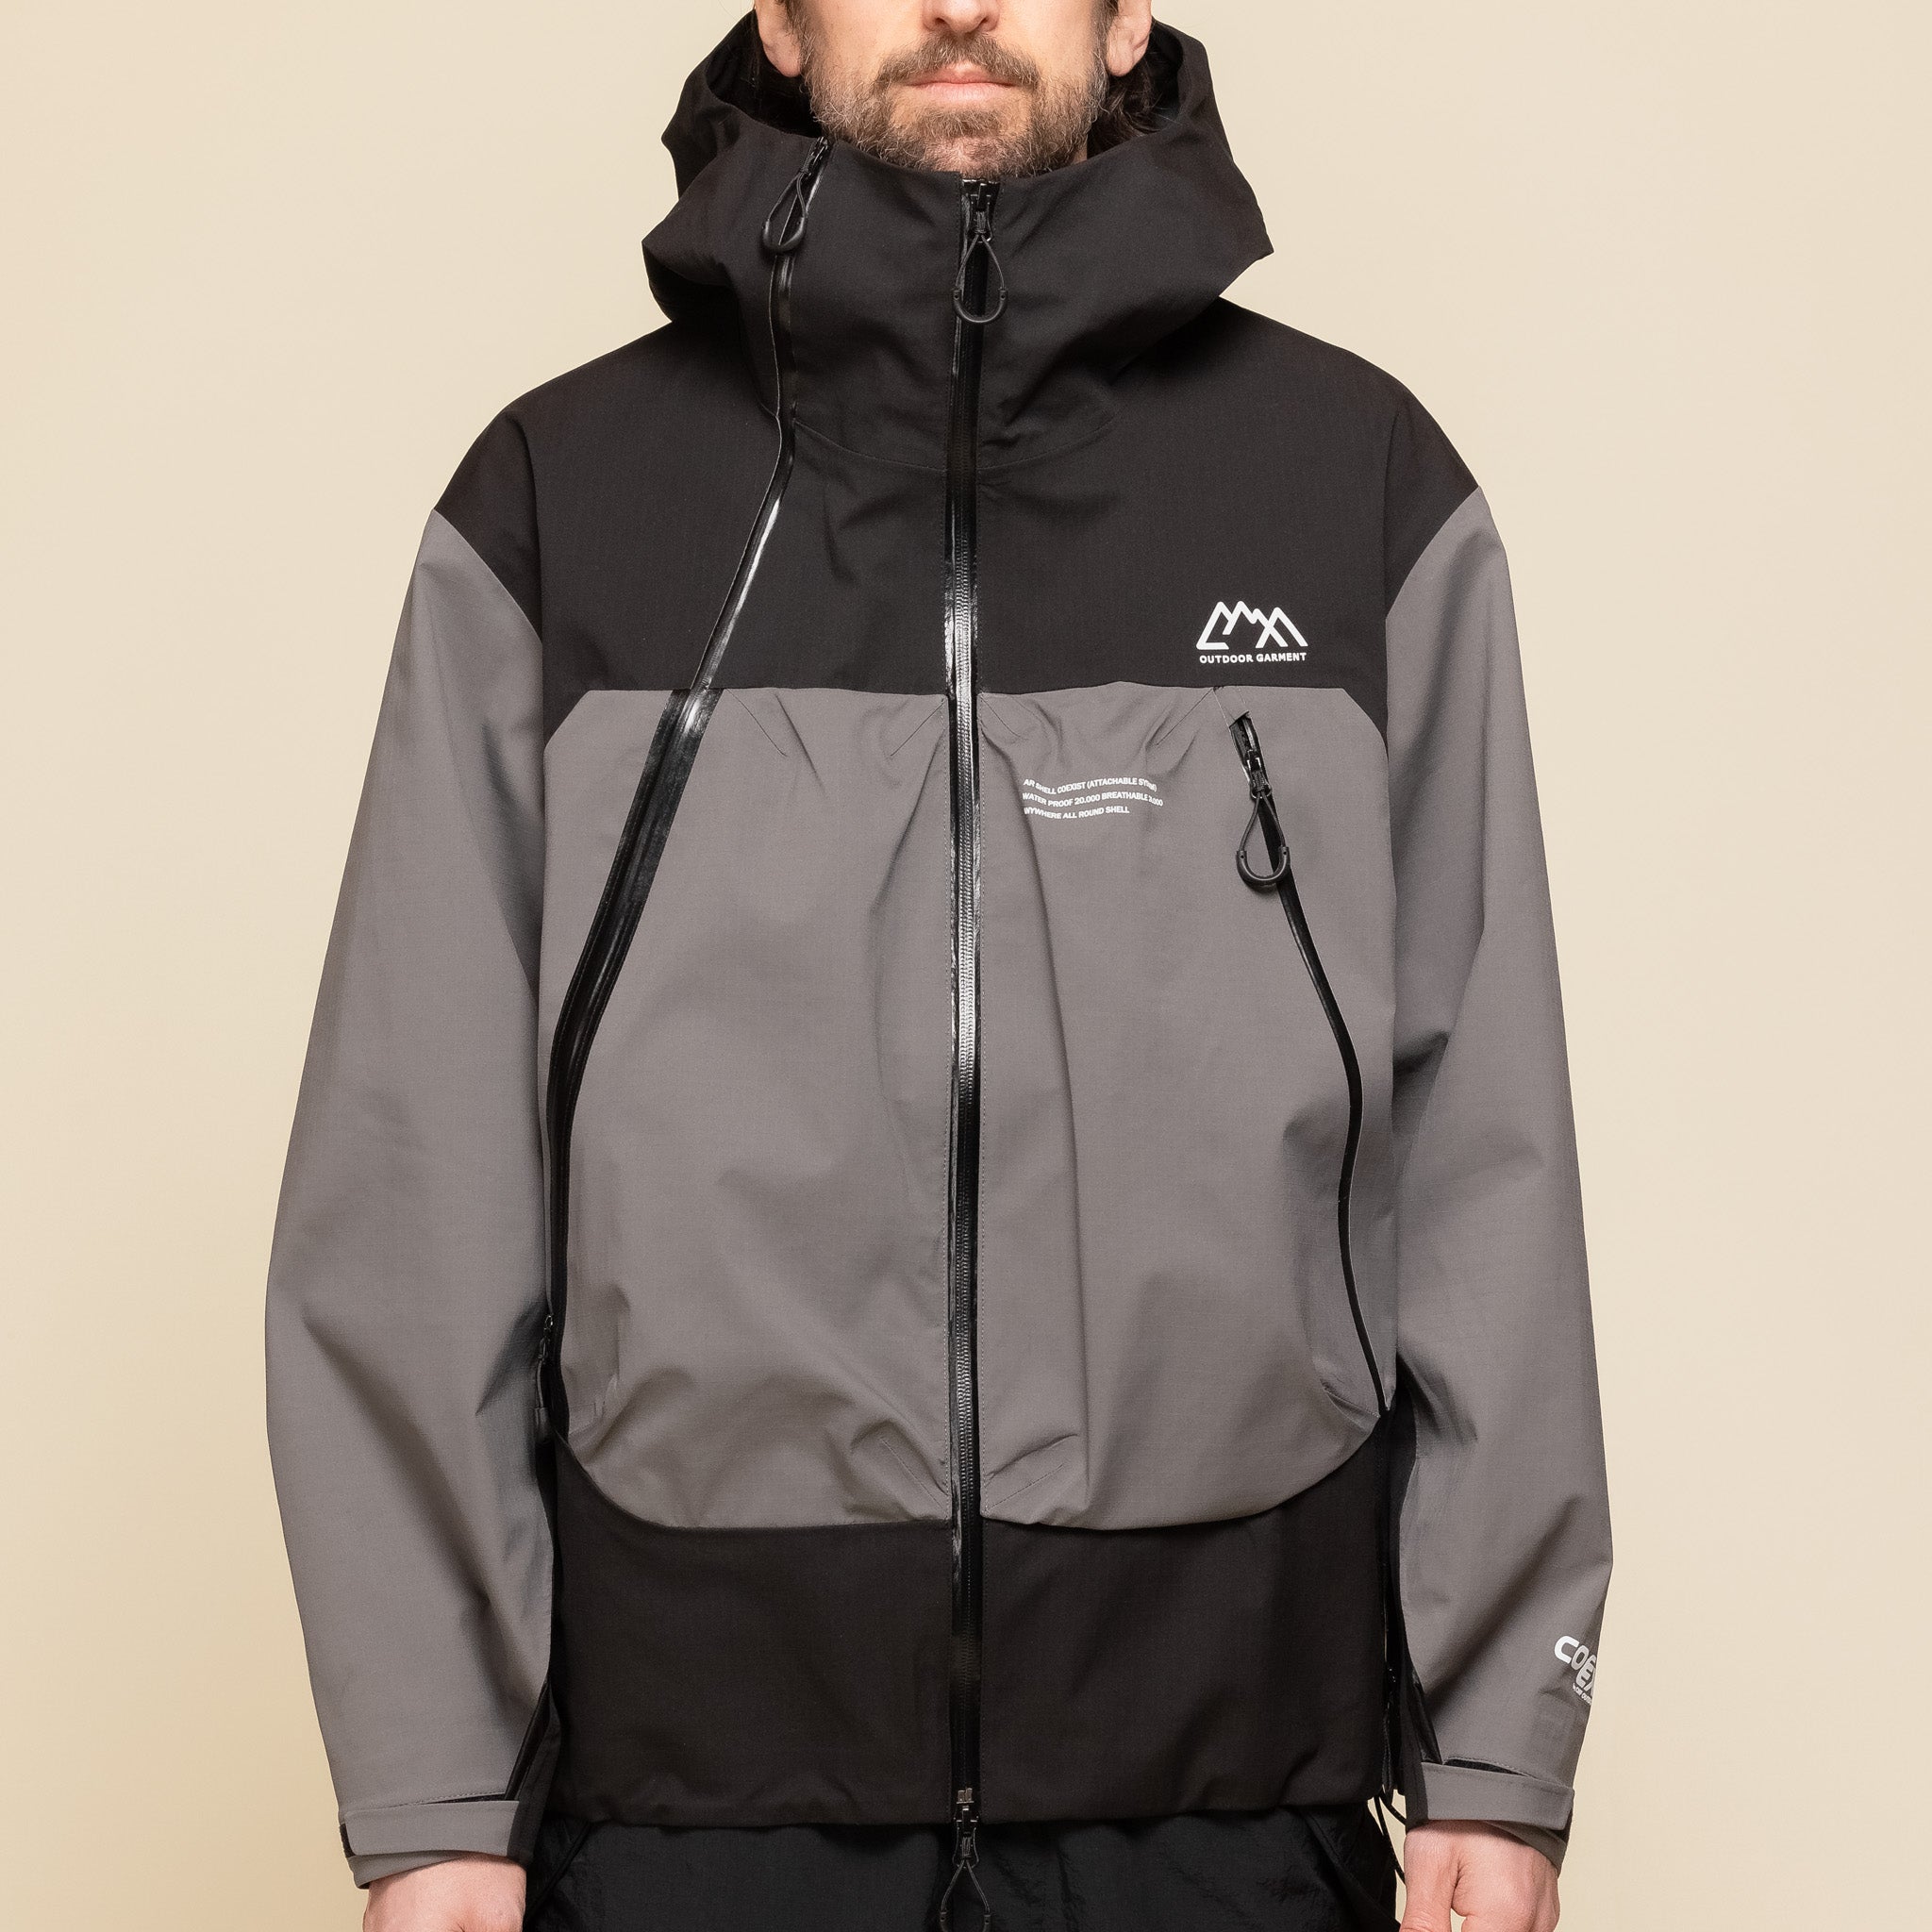 CMF Comfy Outdoor Garment - AR Shell Coexist Jacket - Charcoal